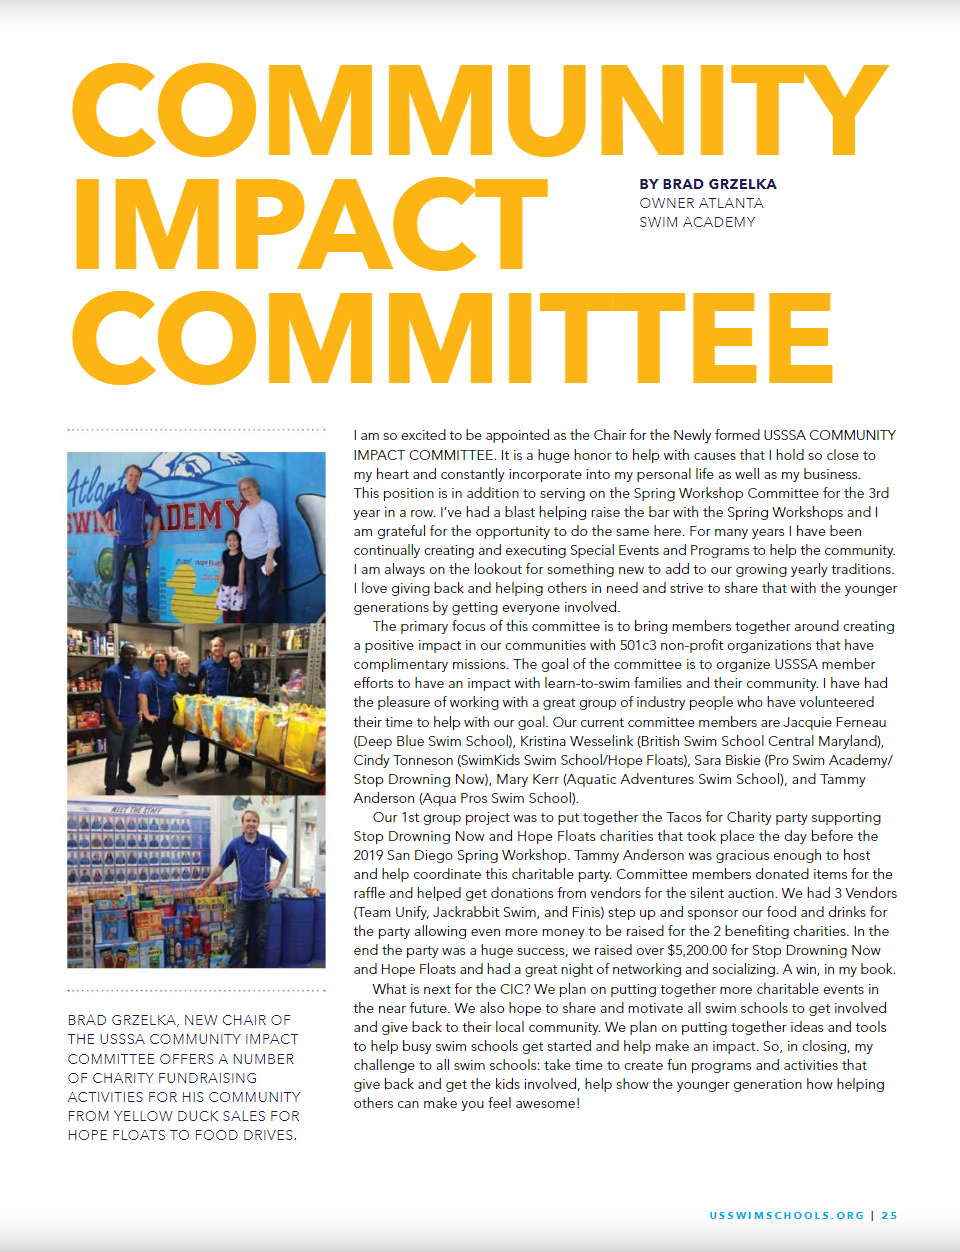 Community impact article